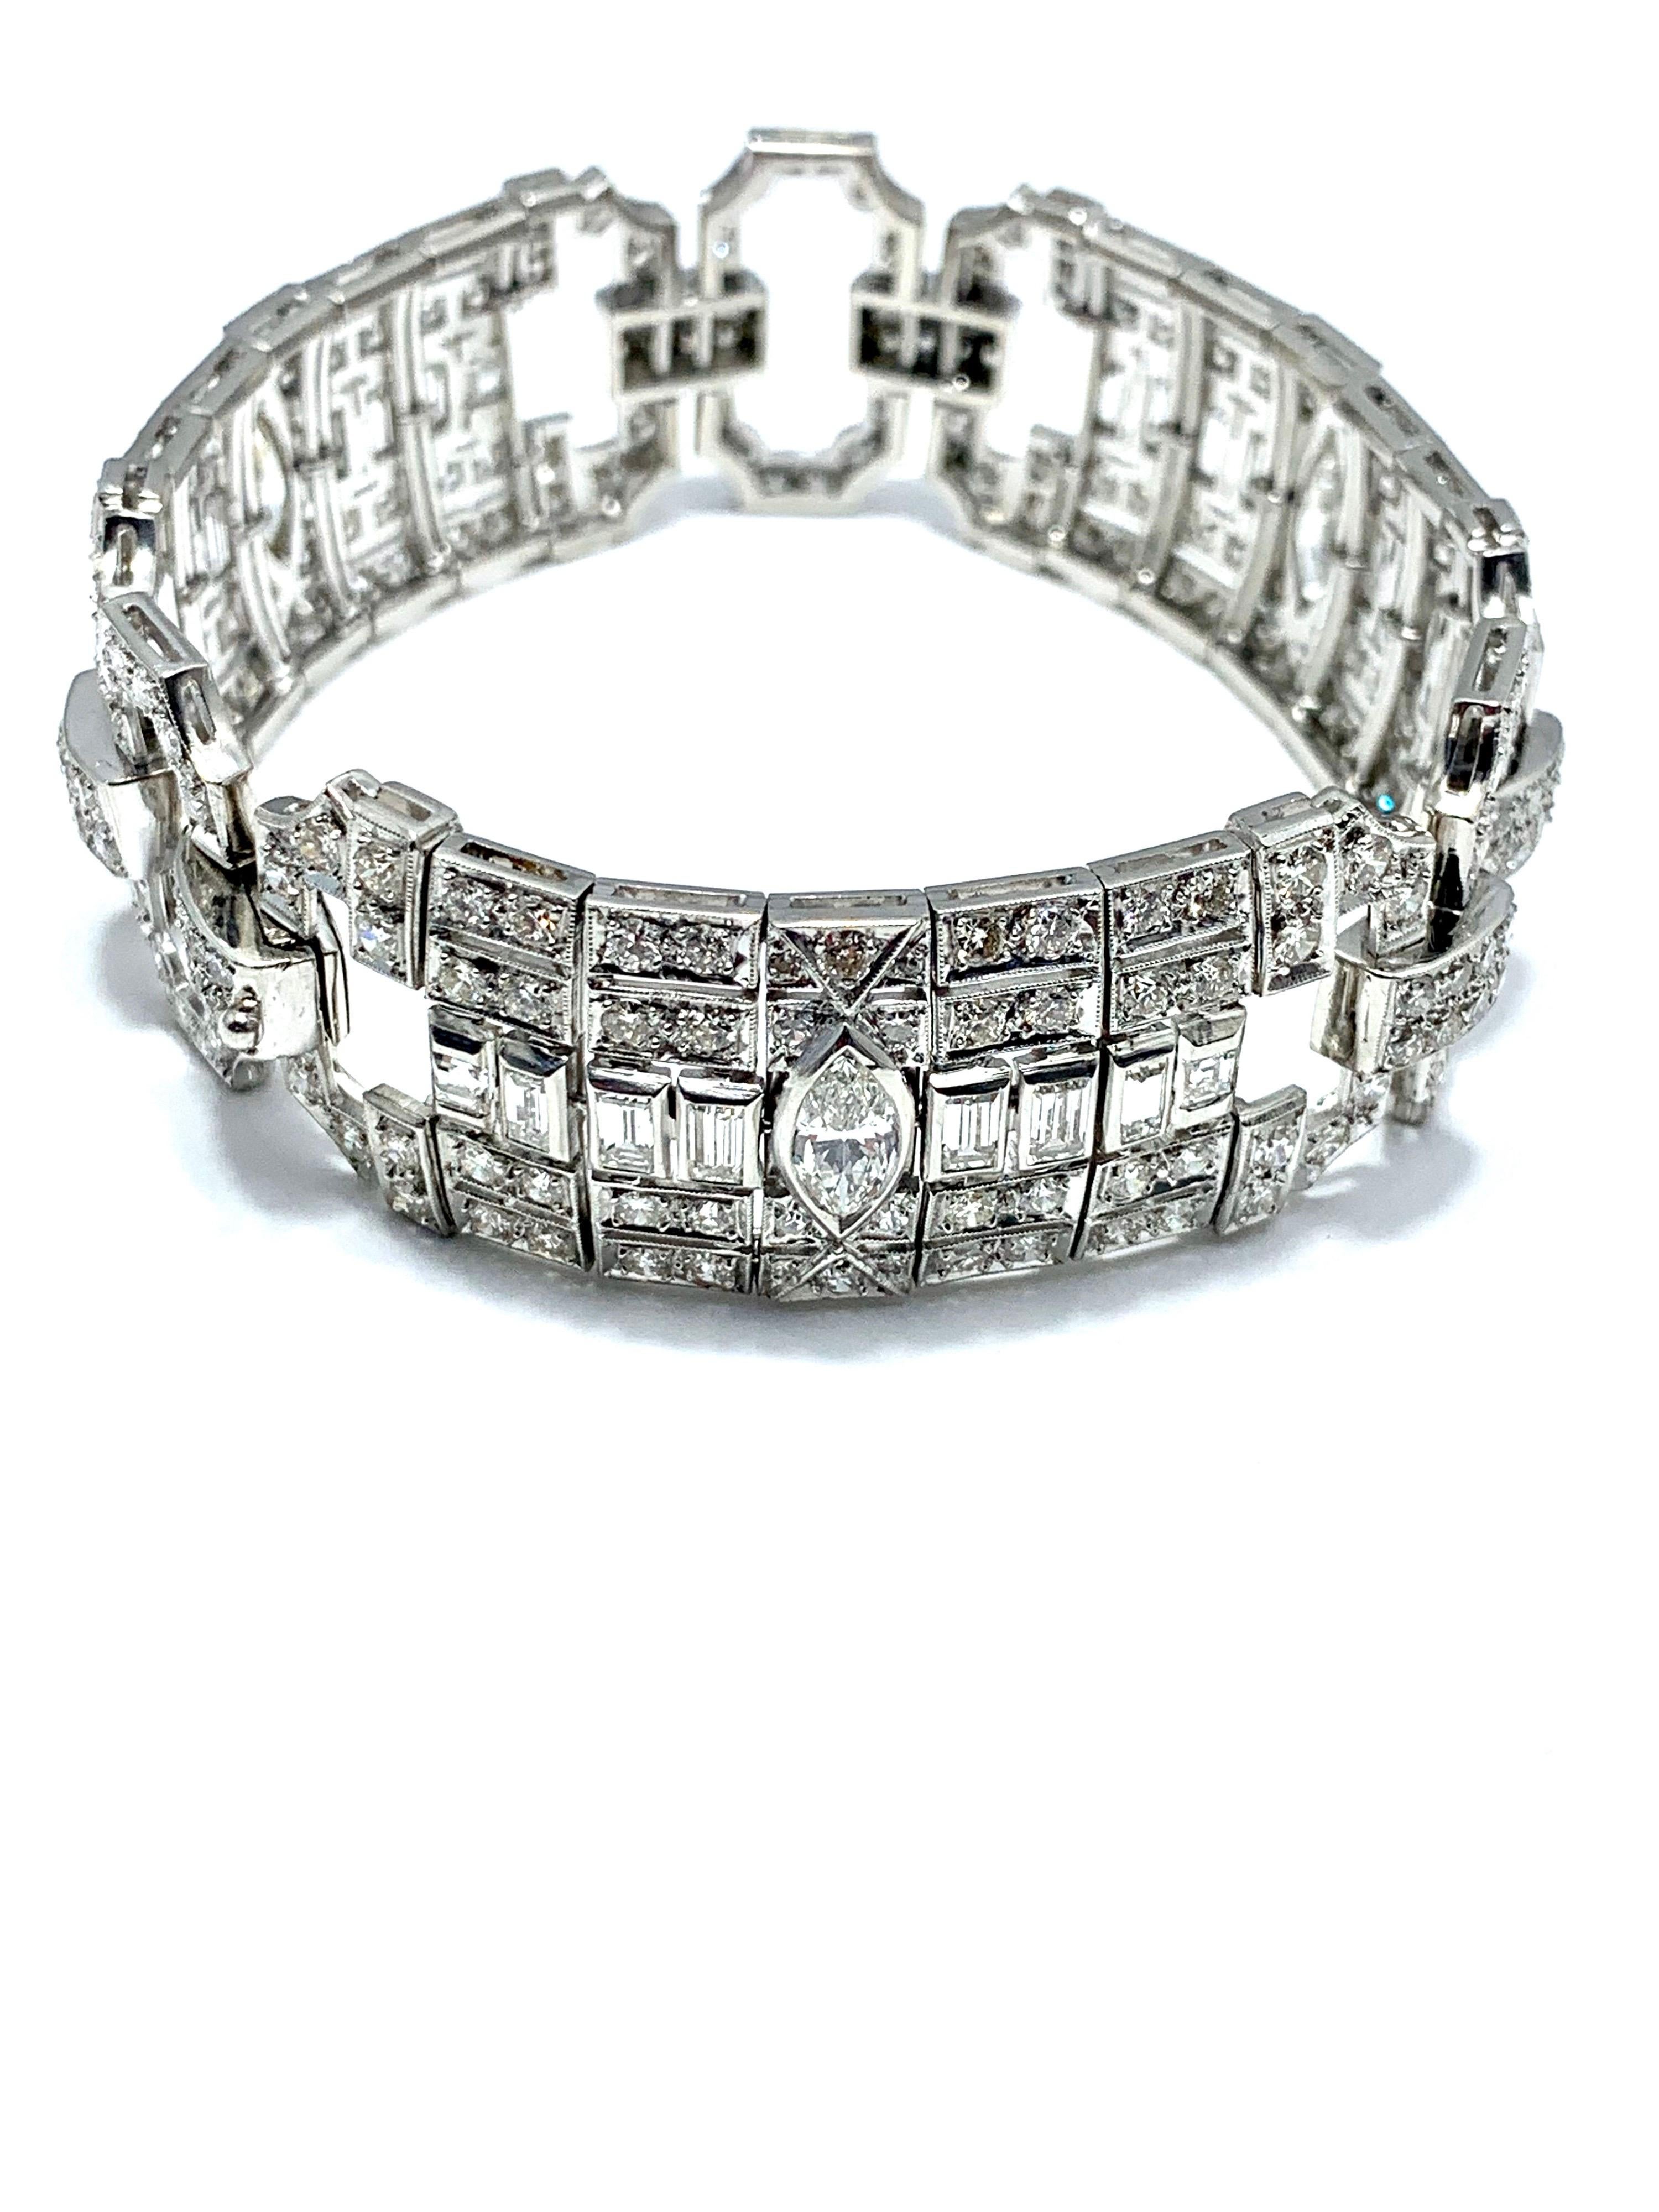 10.25 Carat Art Deco Style Diamond and Platinum Bracelet 2